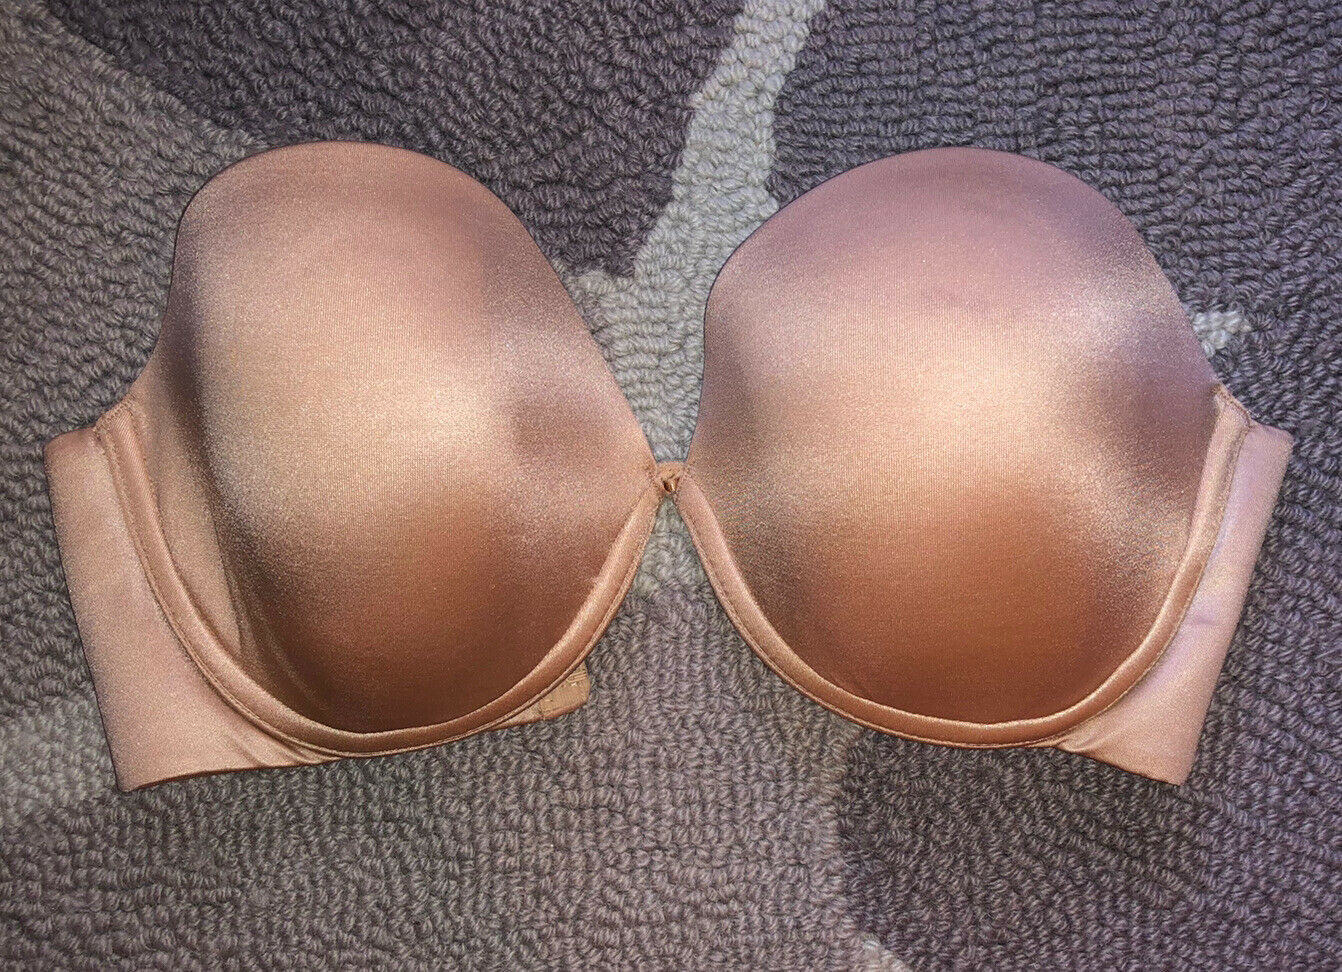 Victoria Secret Very Sexy Black Mesh Sheer Nude Push Up Bra 34D V